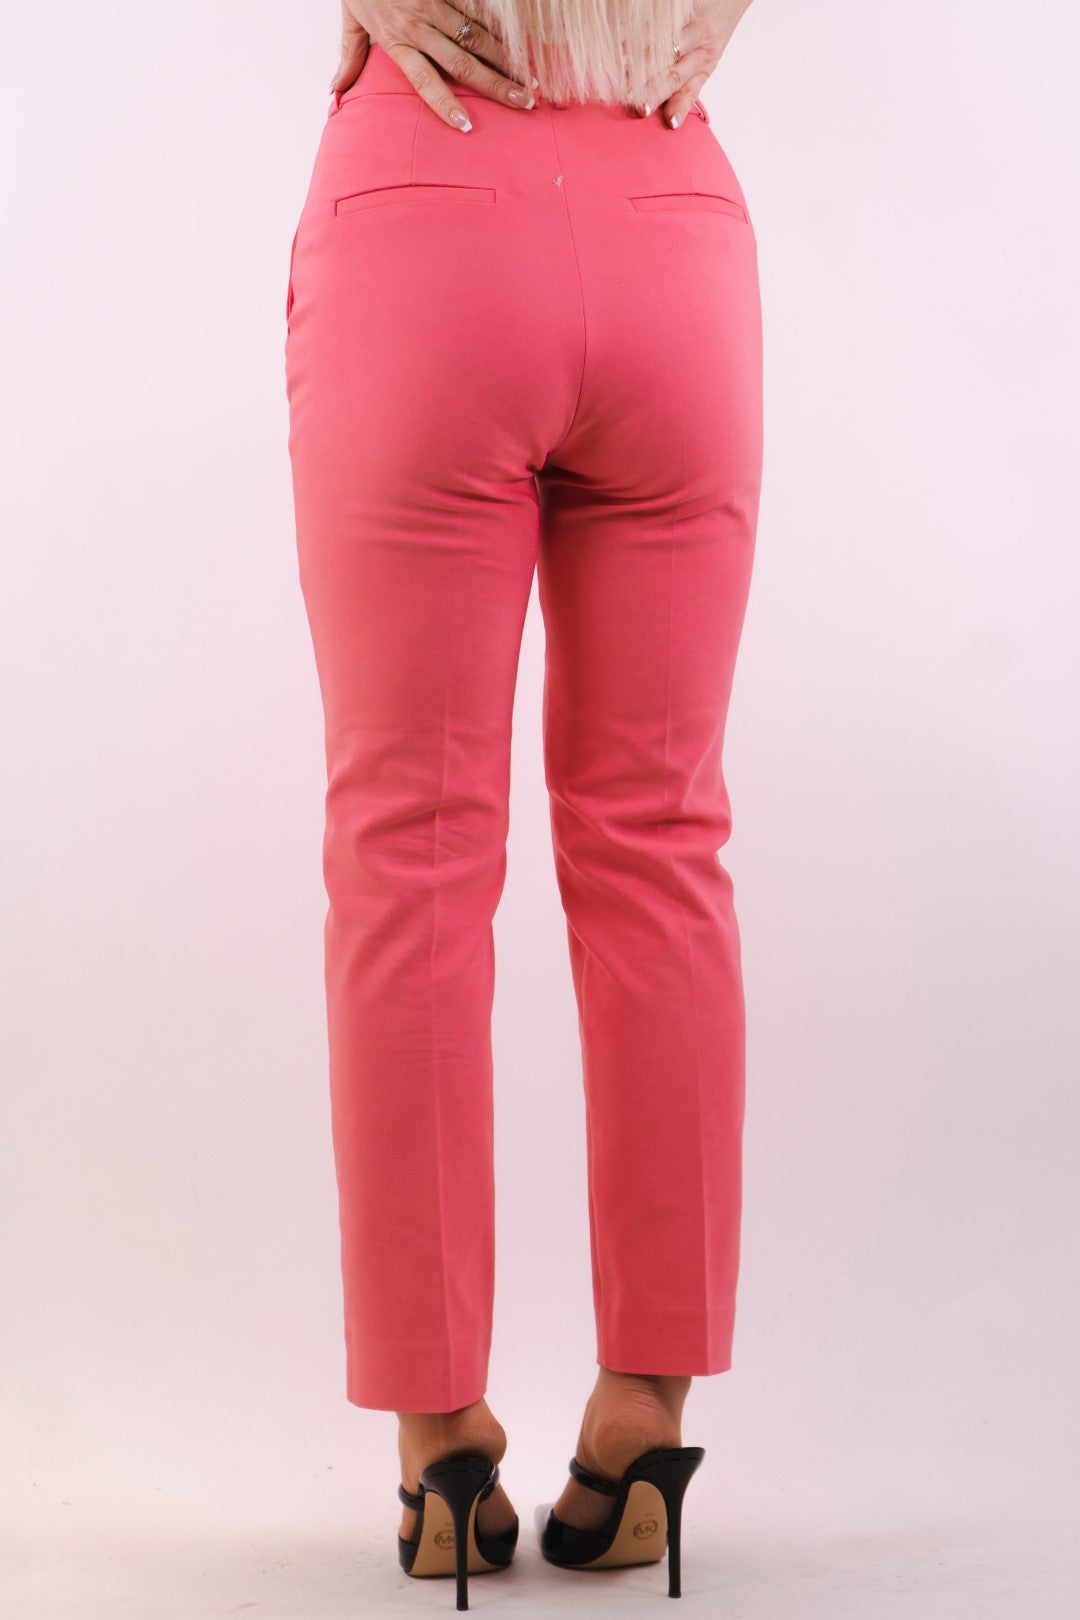 Pink Hugo Boss pants